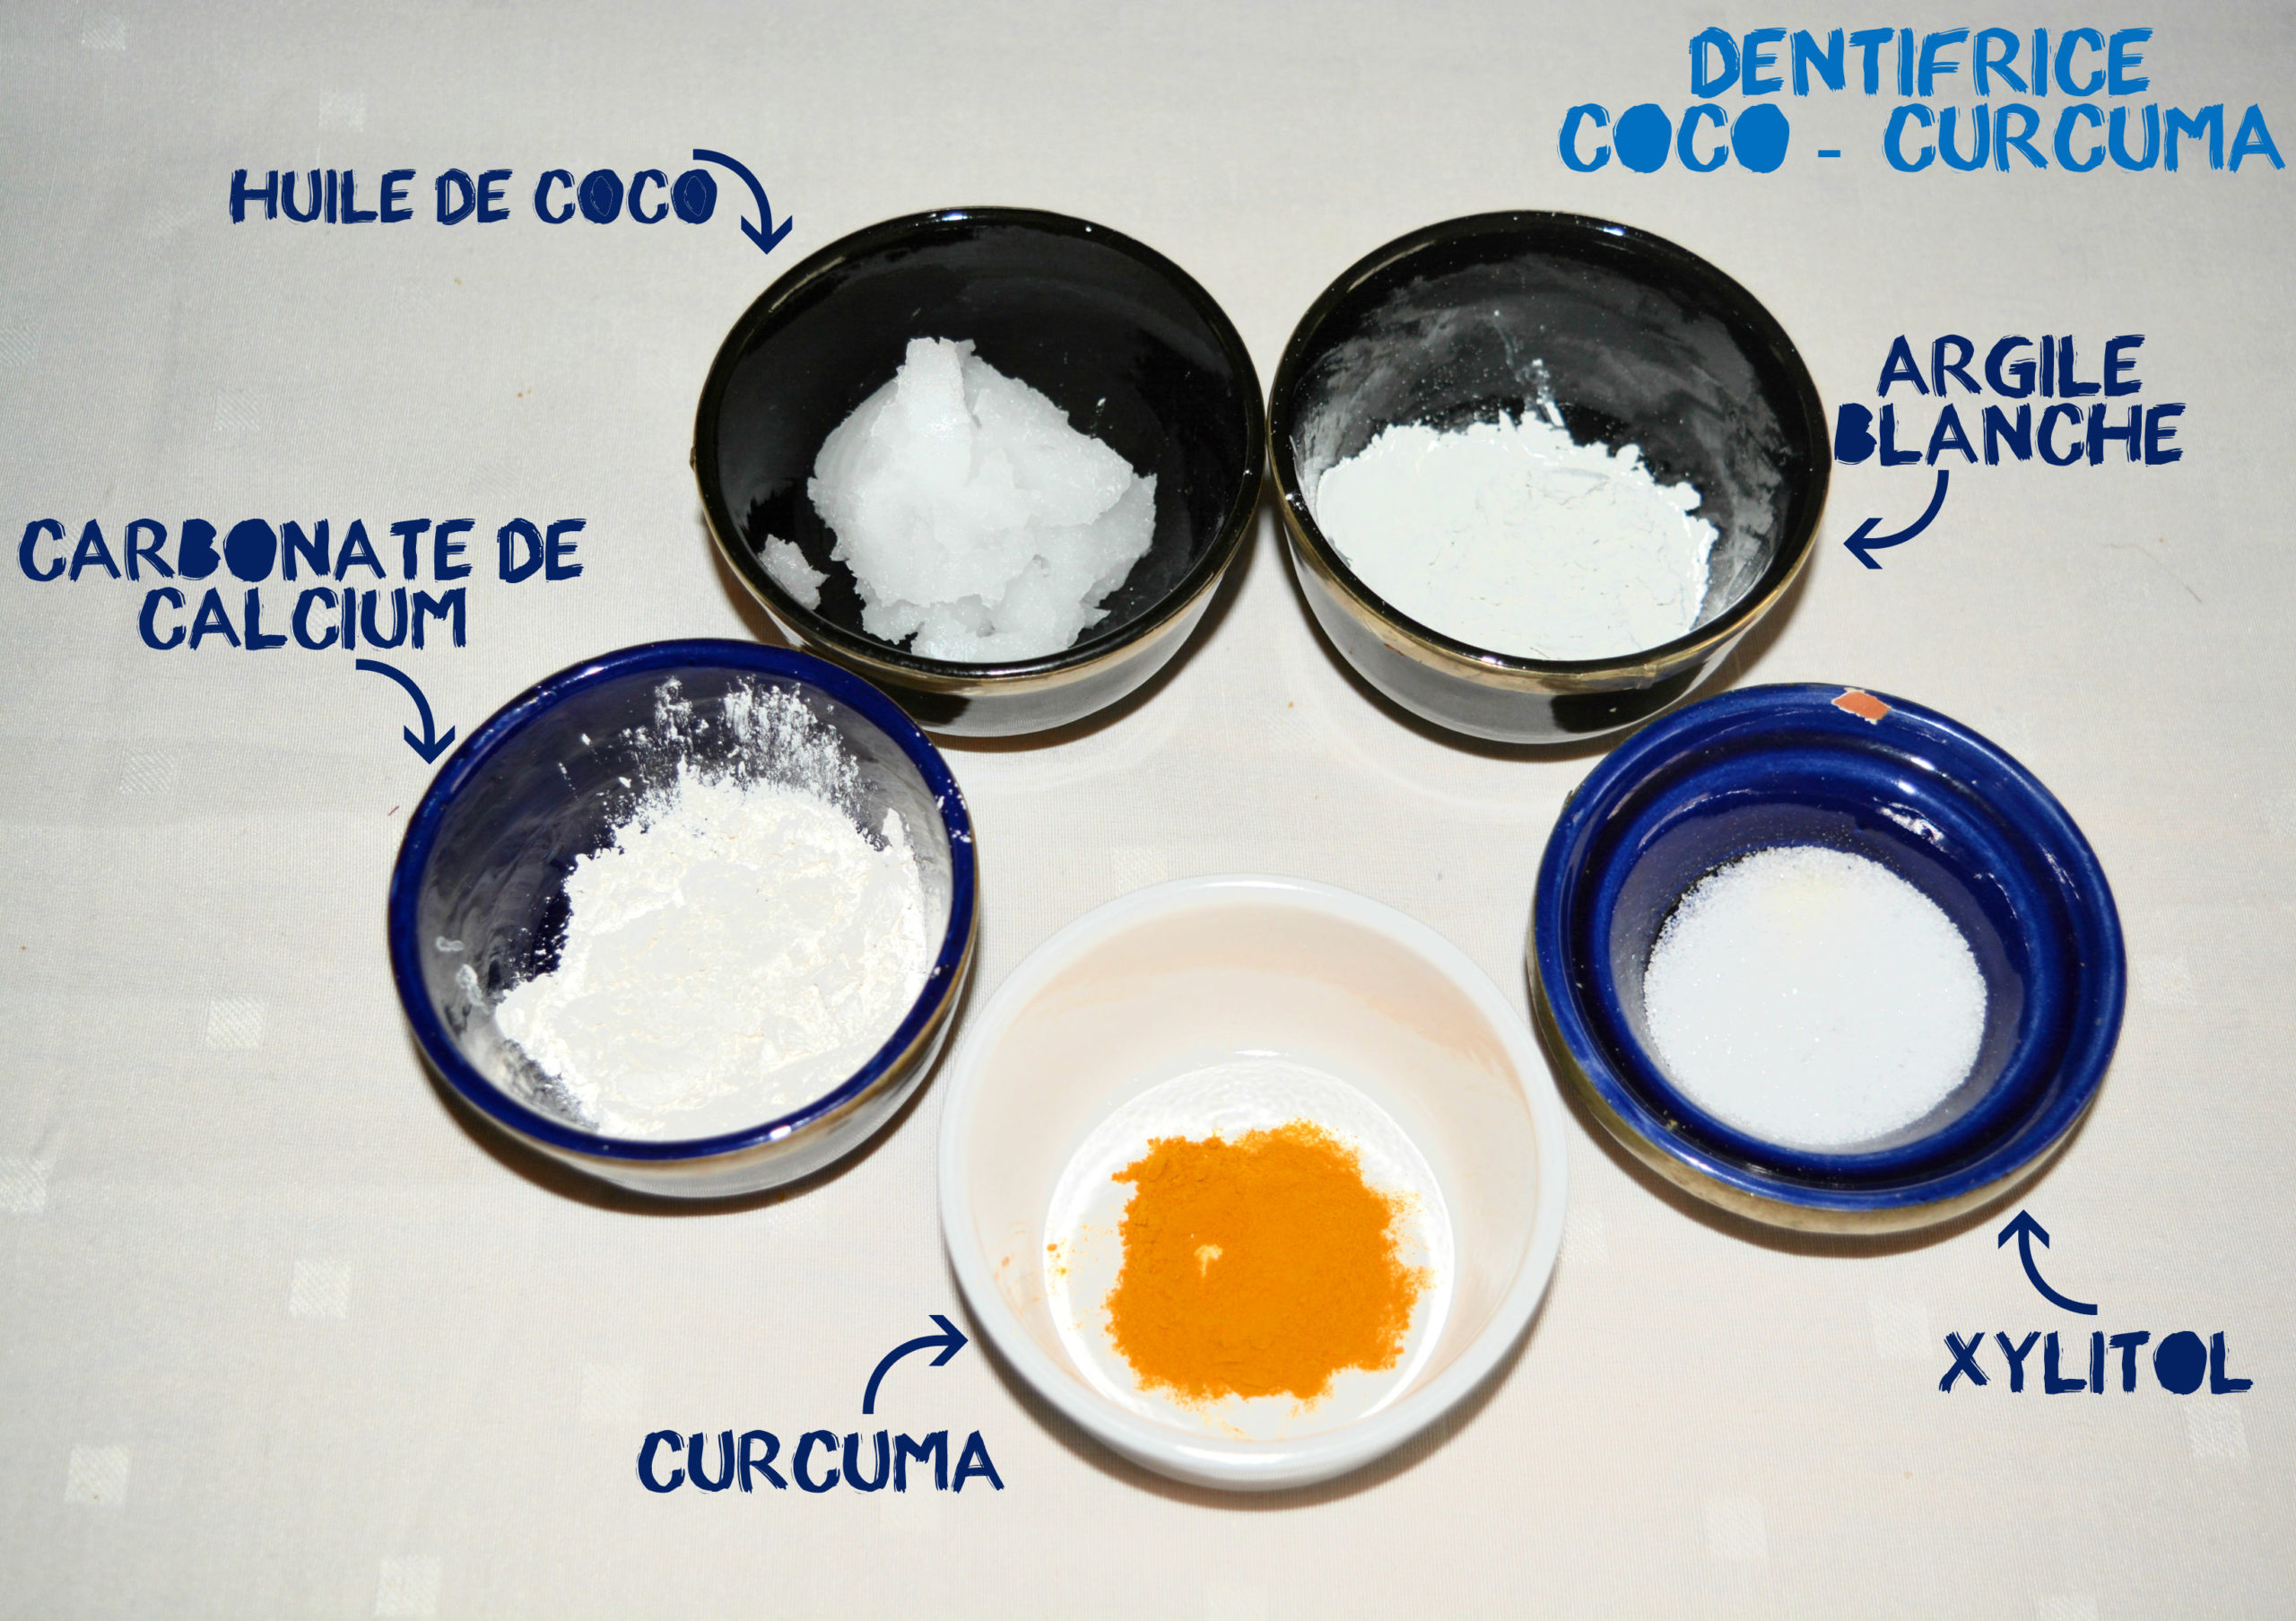 [DIY] Dentifrice blanchissant huile de coco et curcuma